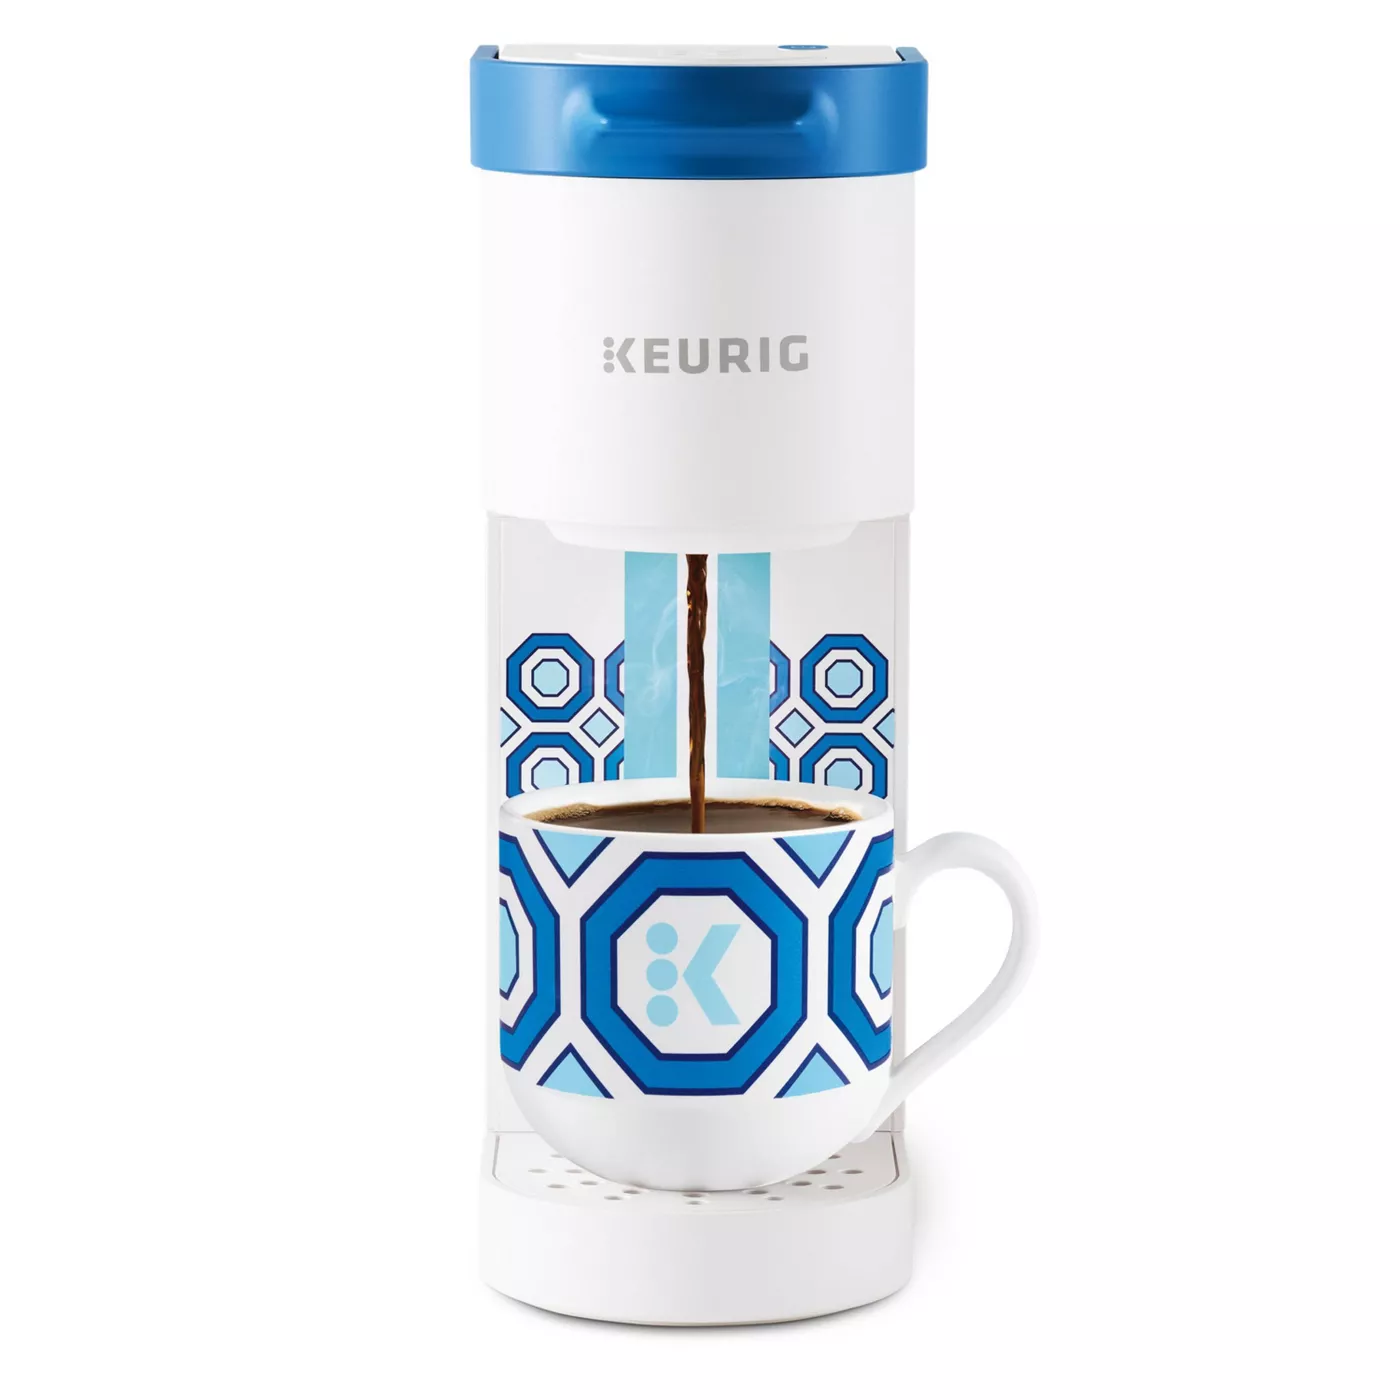 Keurig K-Mini Basic Jonathan Adler Limited Edition Single-Serve K-Cup Pod Coffee Maker - White - image 1 of 11